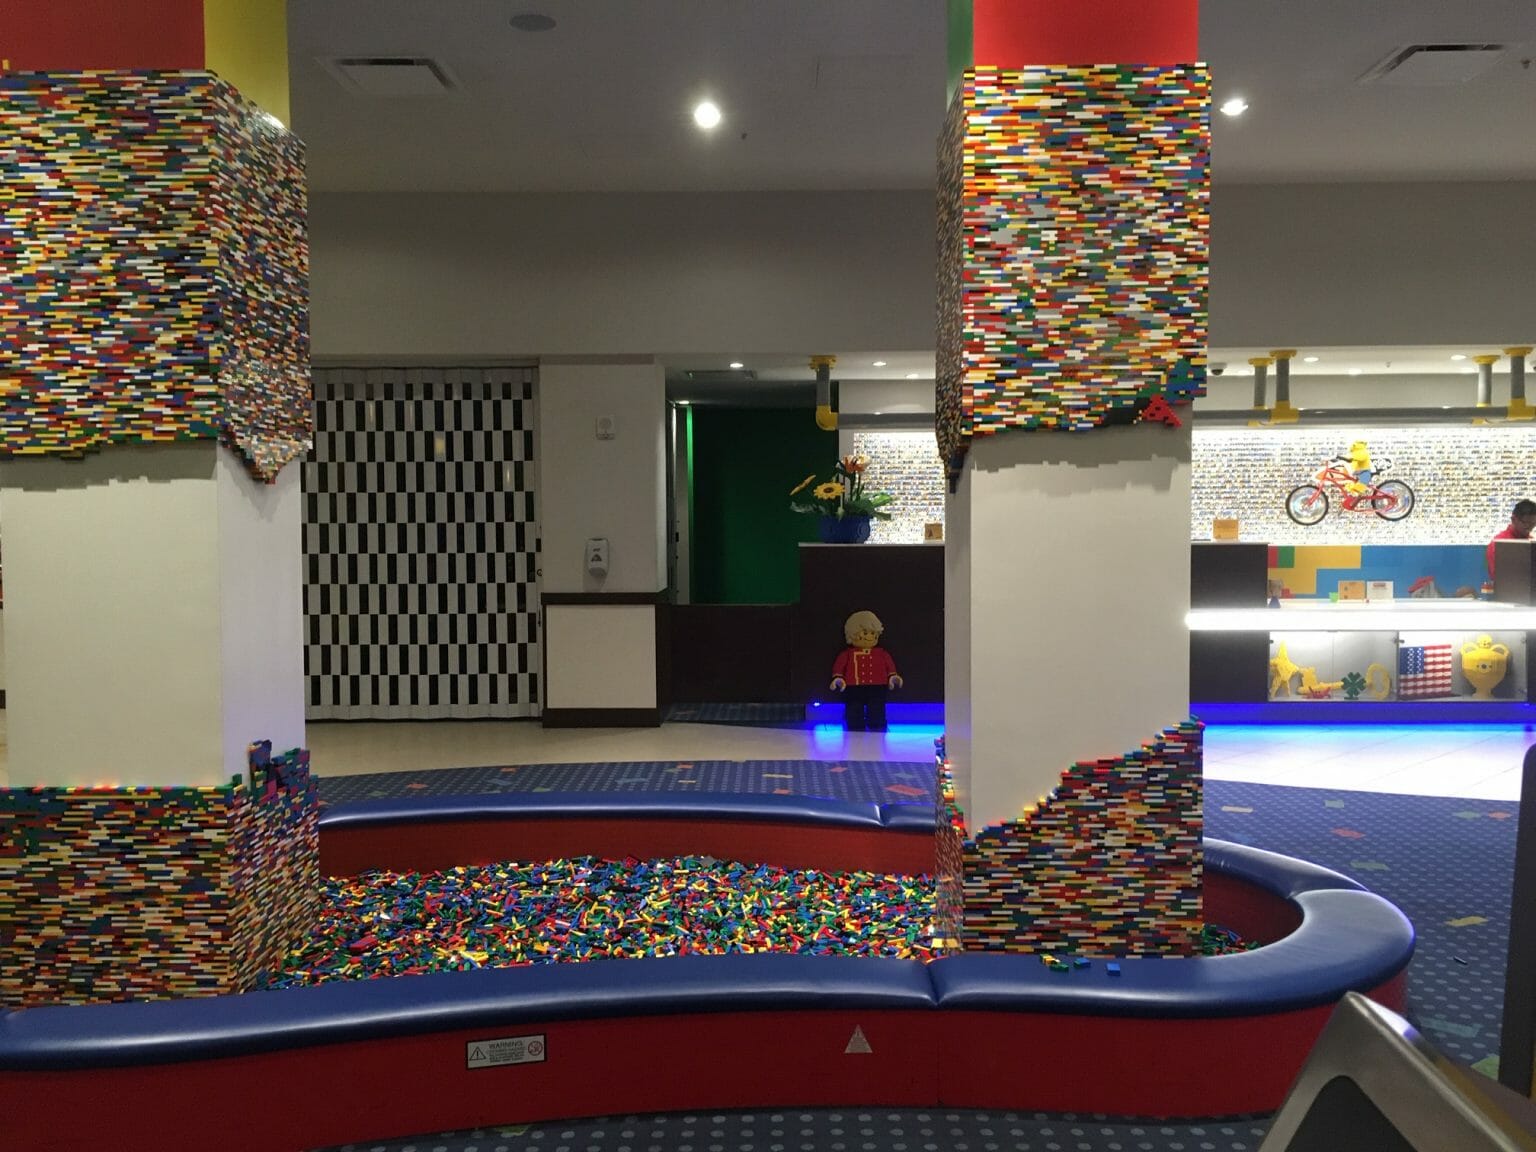 Honest Legoland Florida Hotel Review 2021 + Tons of Photos